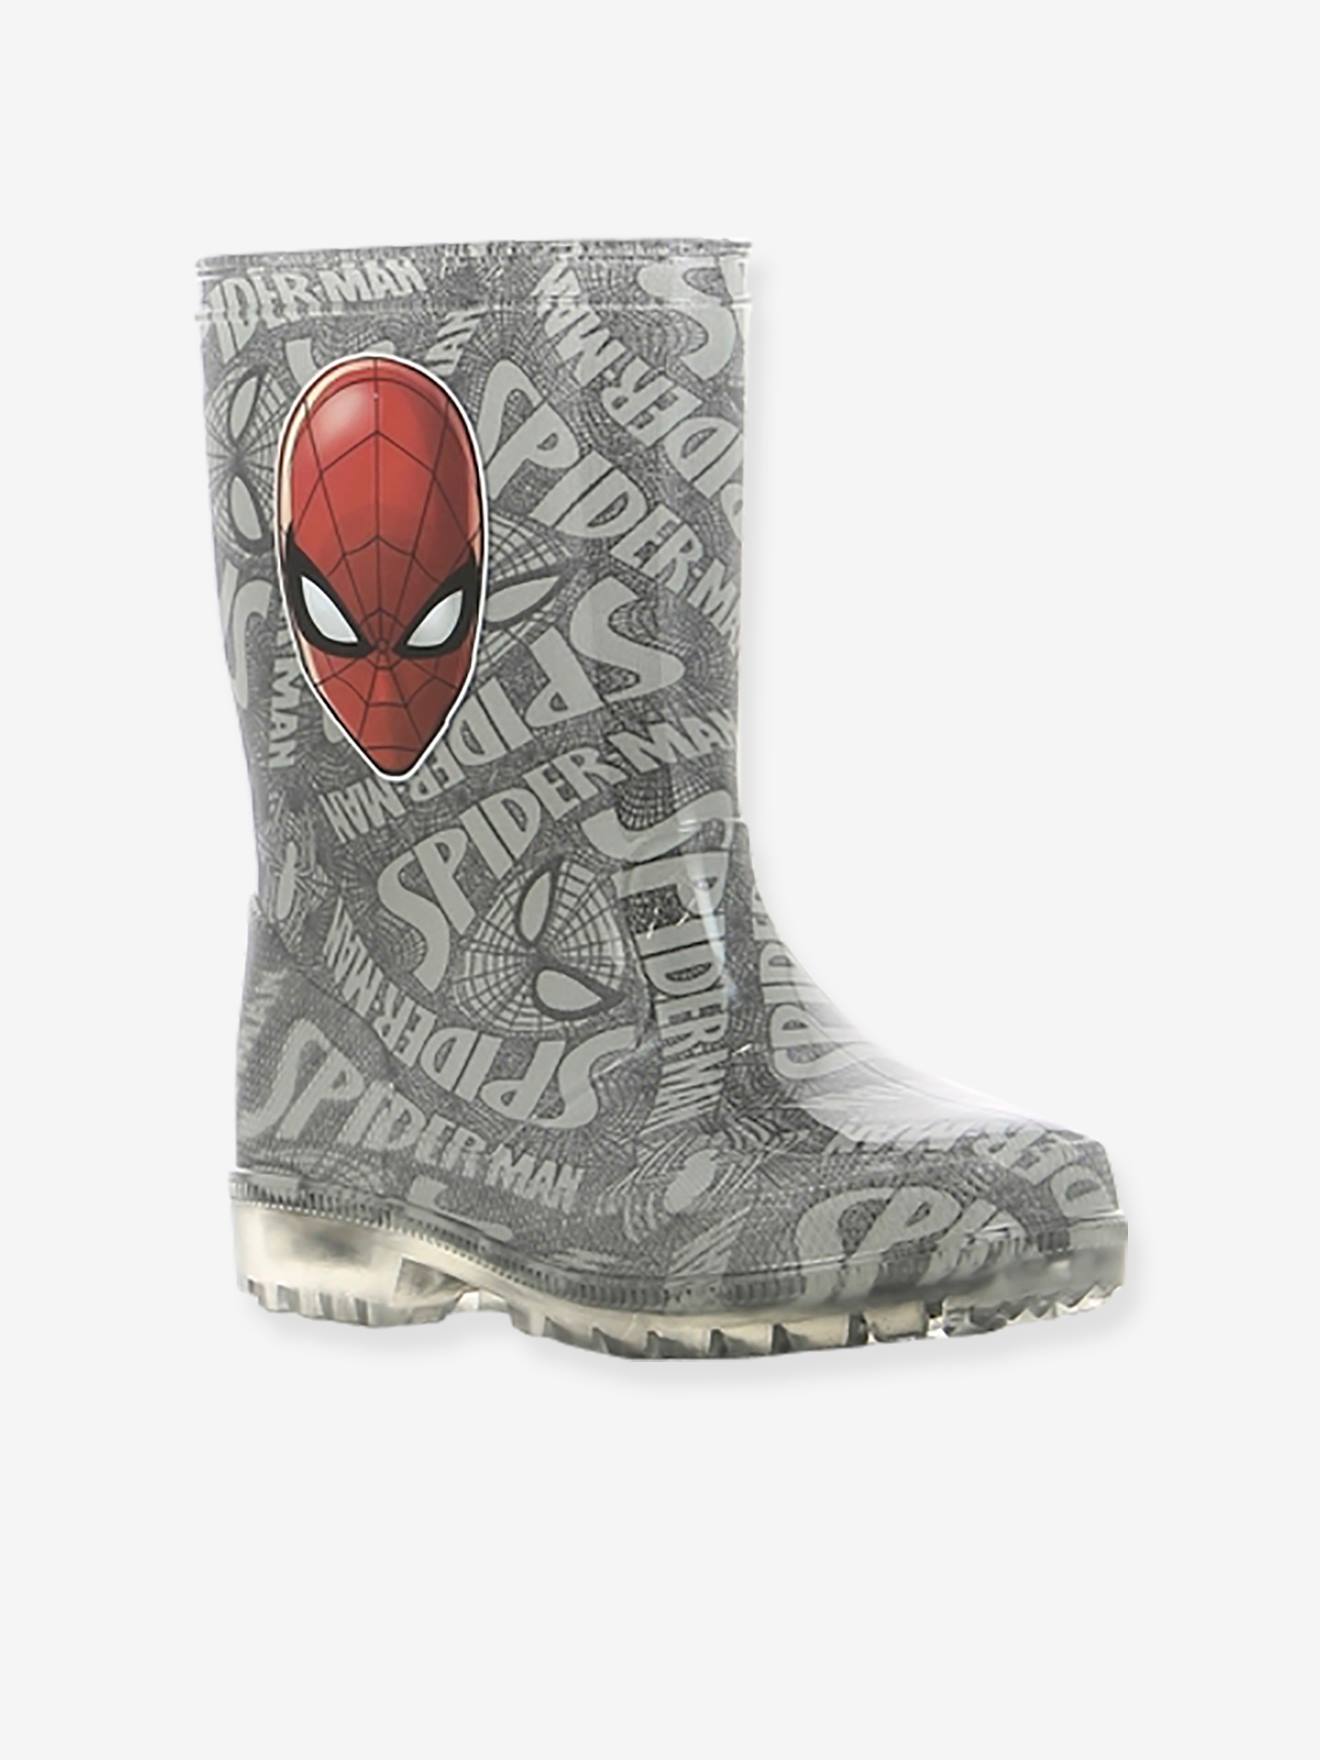 Chaussures Spider-Man lumineuses • Enfant World